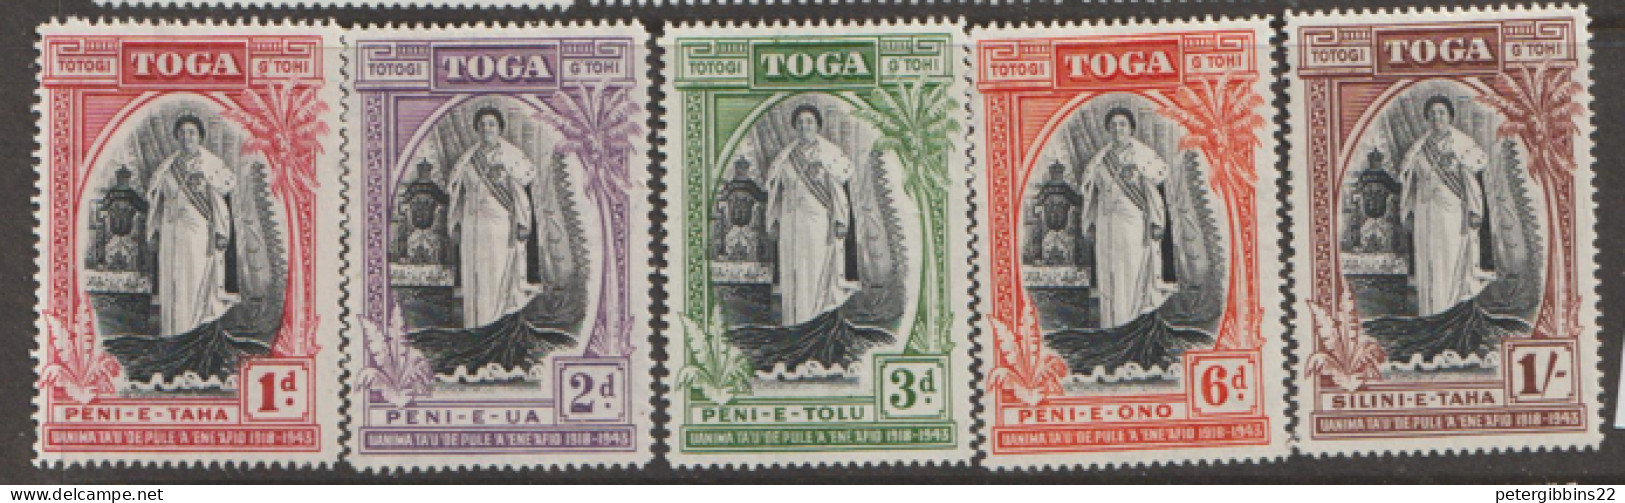 Tonga    1944   SG 83-7  Silver Jubilee   Mounted Mint - Tonga (...-1970)